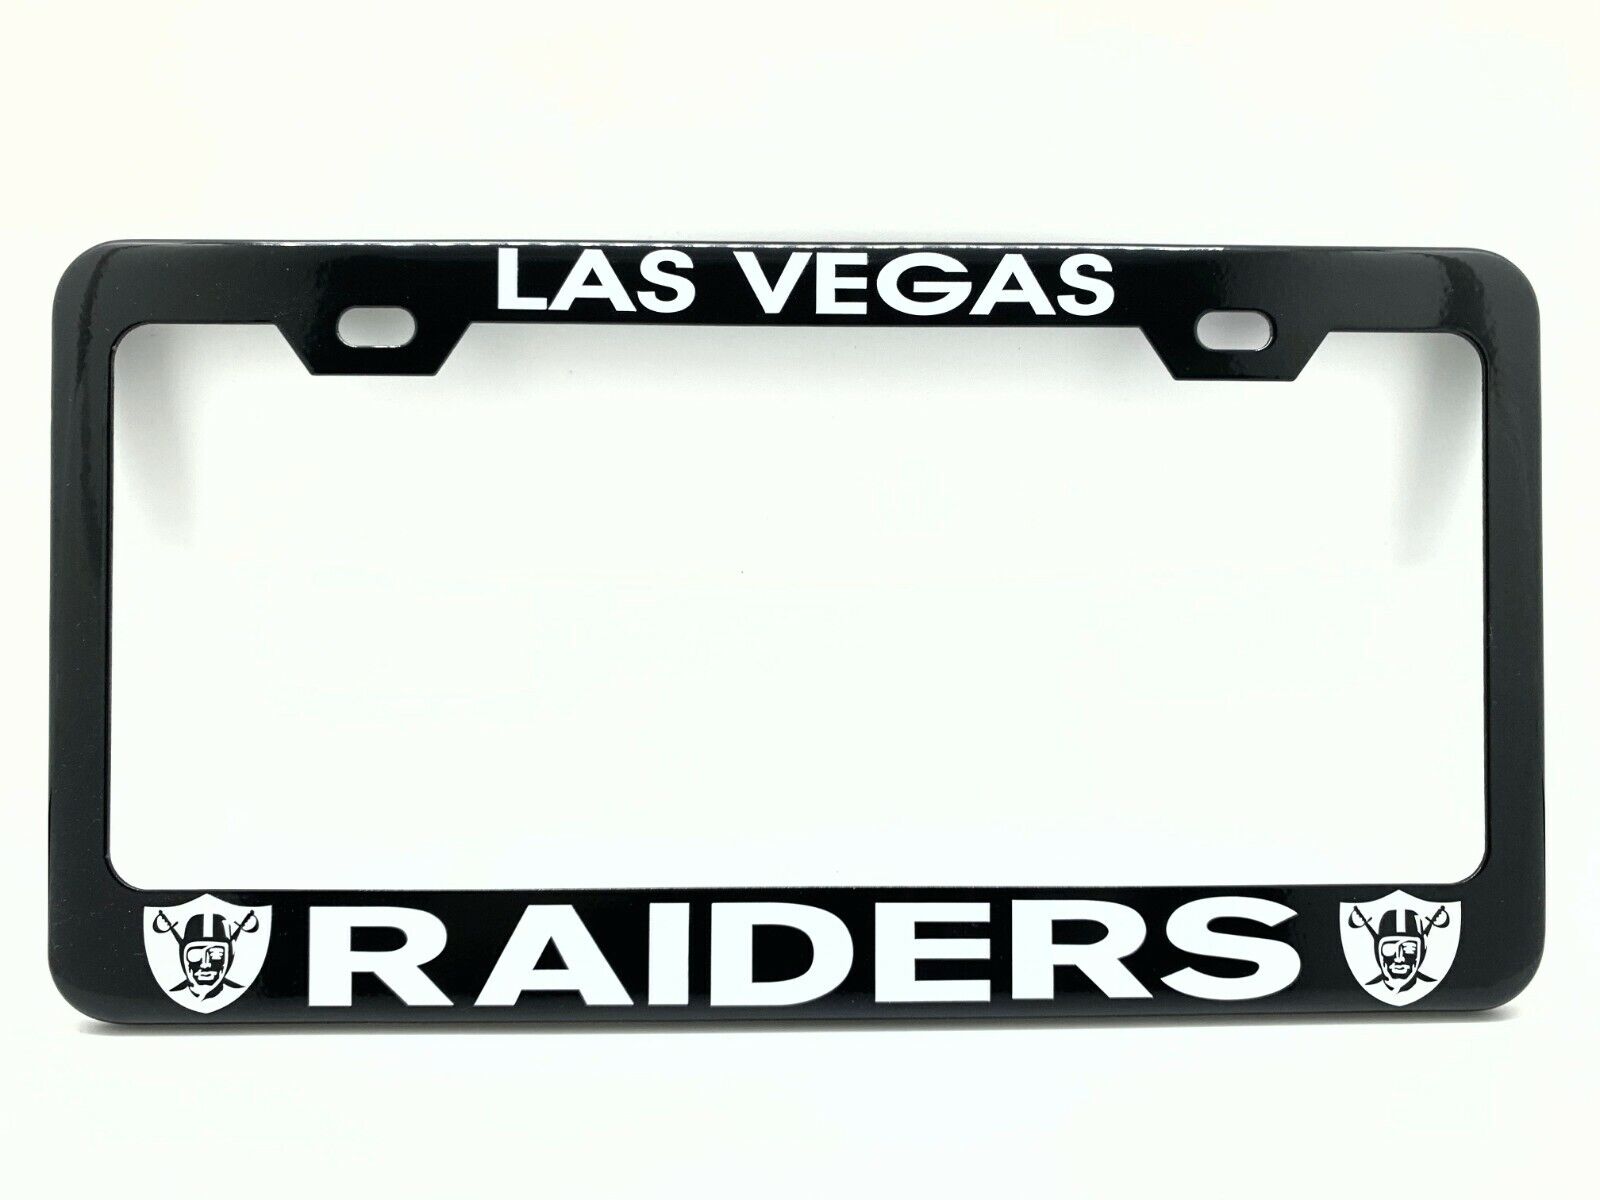 LAS VEGAS RAIDERS Black License Plate Frame, Custom Made of Powder Coated Metal